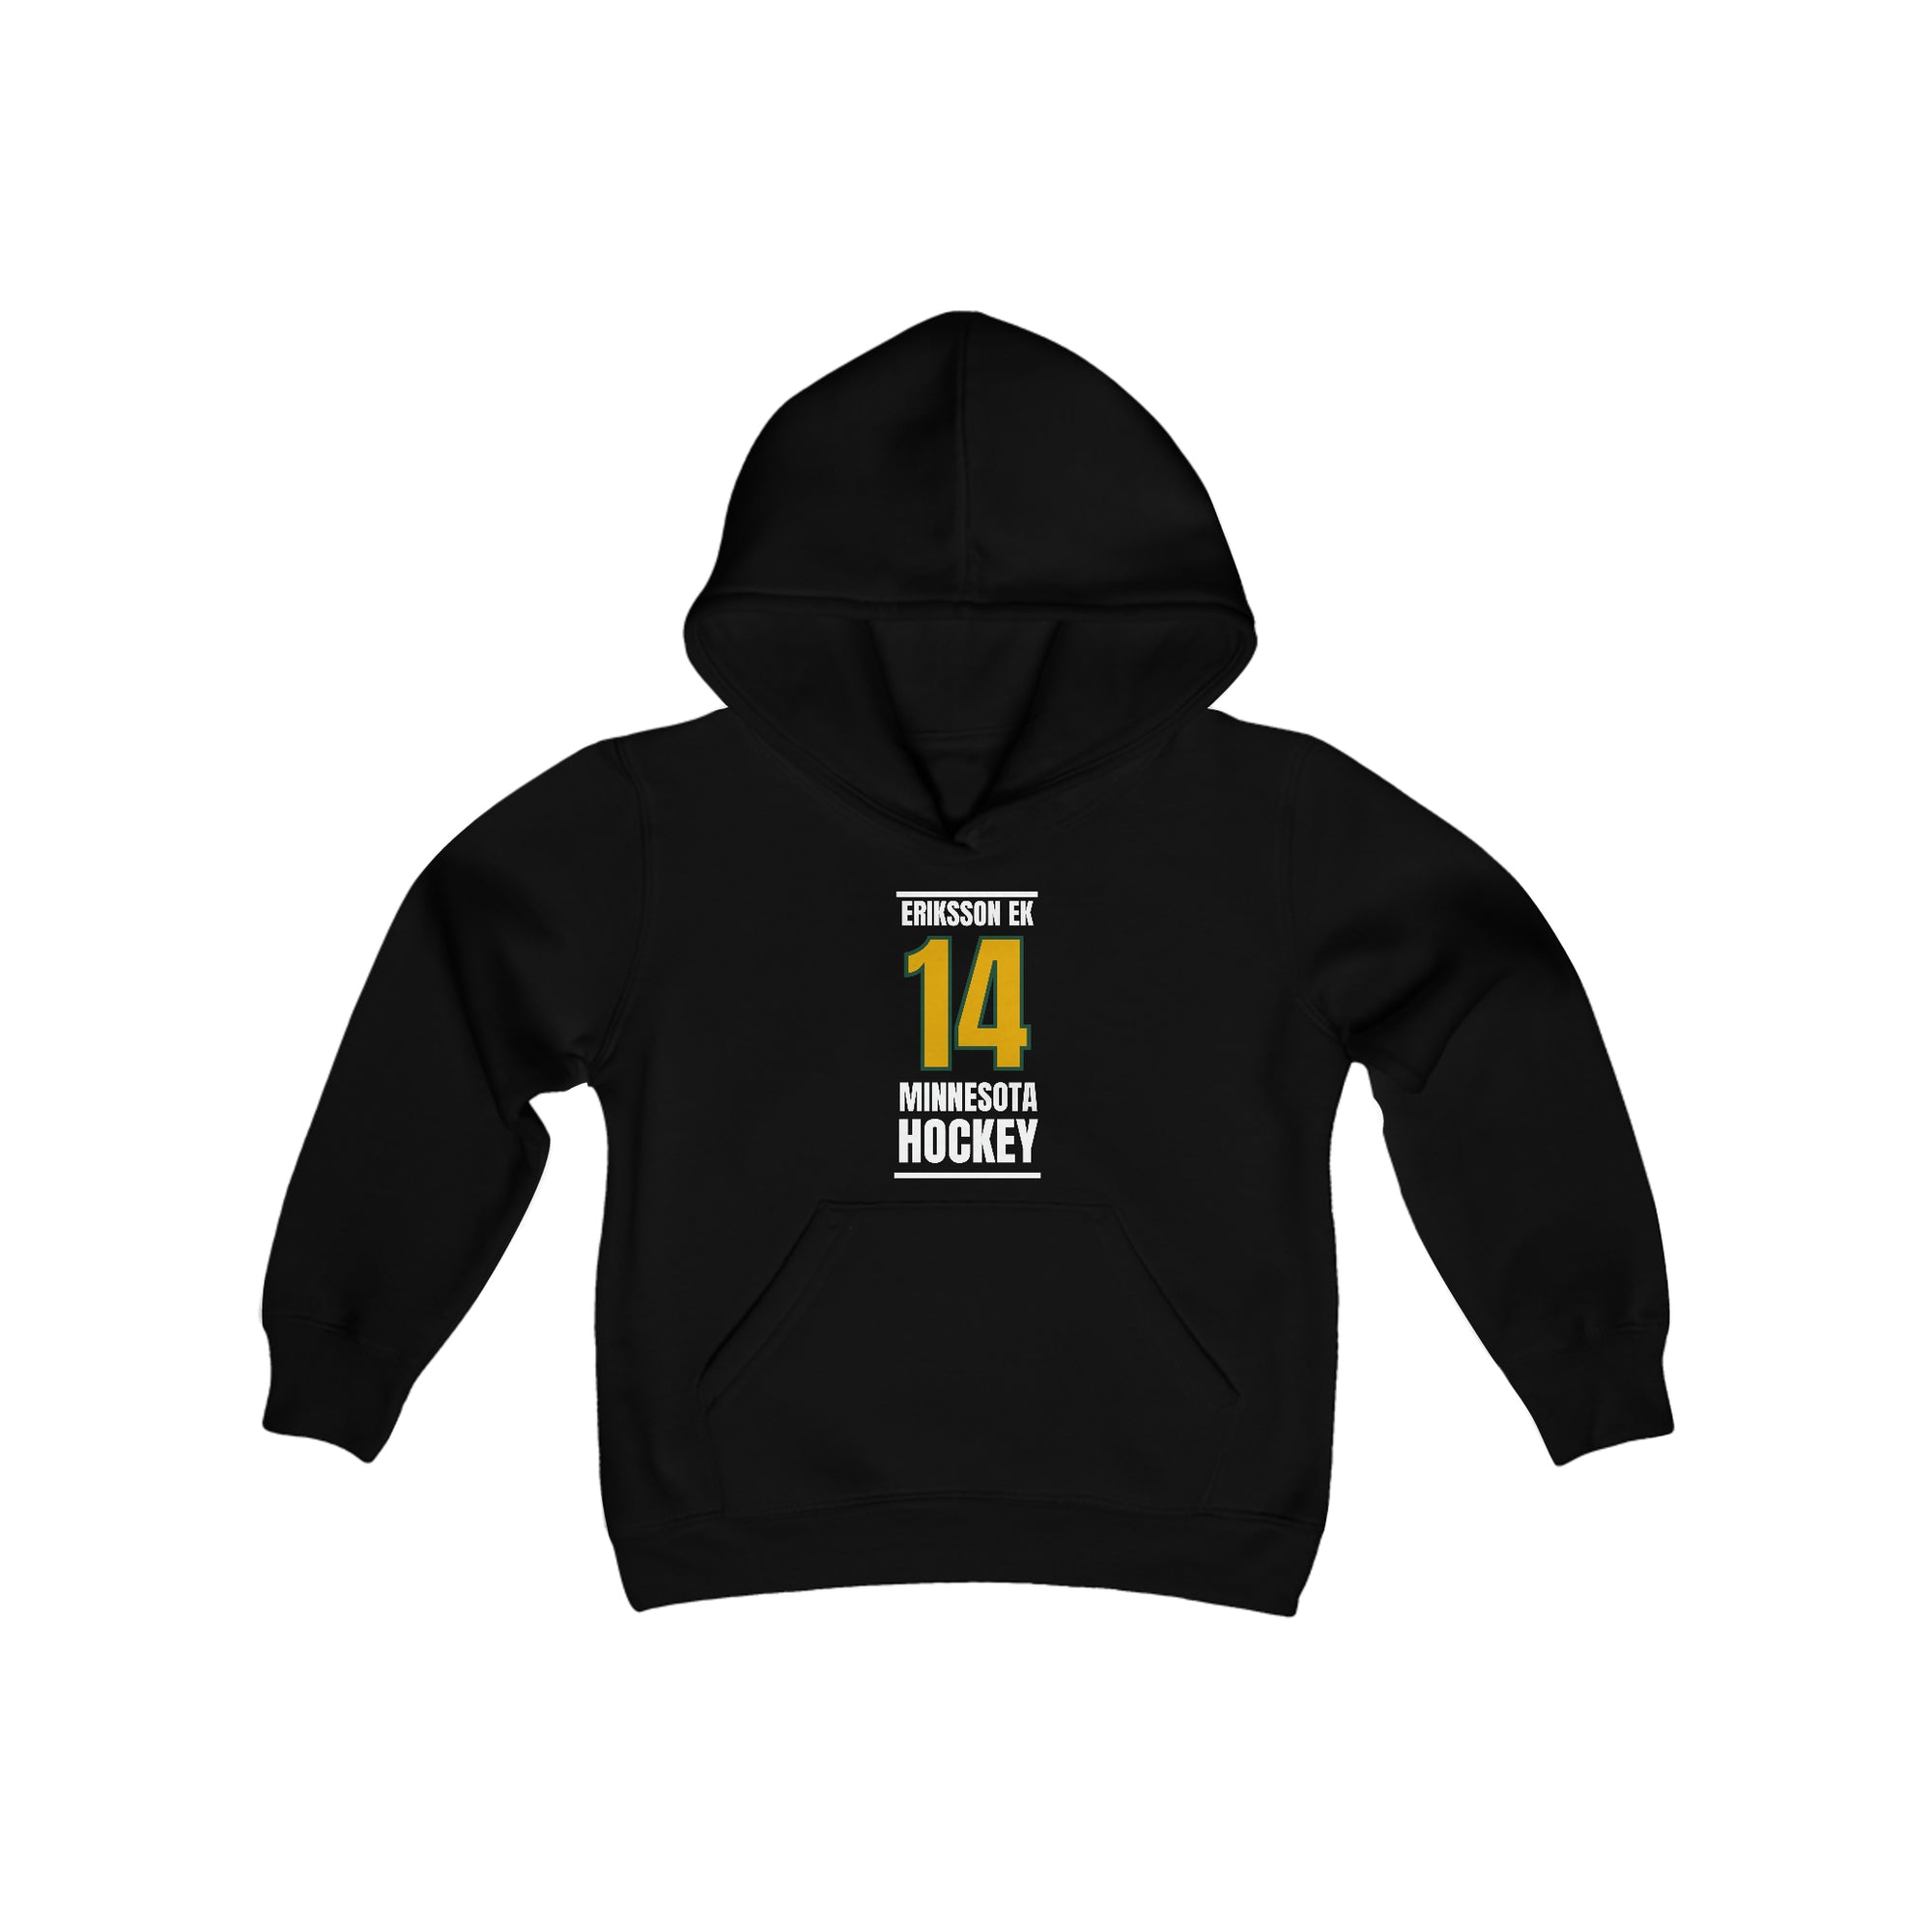 Eriksson Ek 14 Minnesota Hockey Gold Vertical Design Youth Hooded Sweatshirt